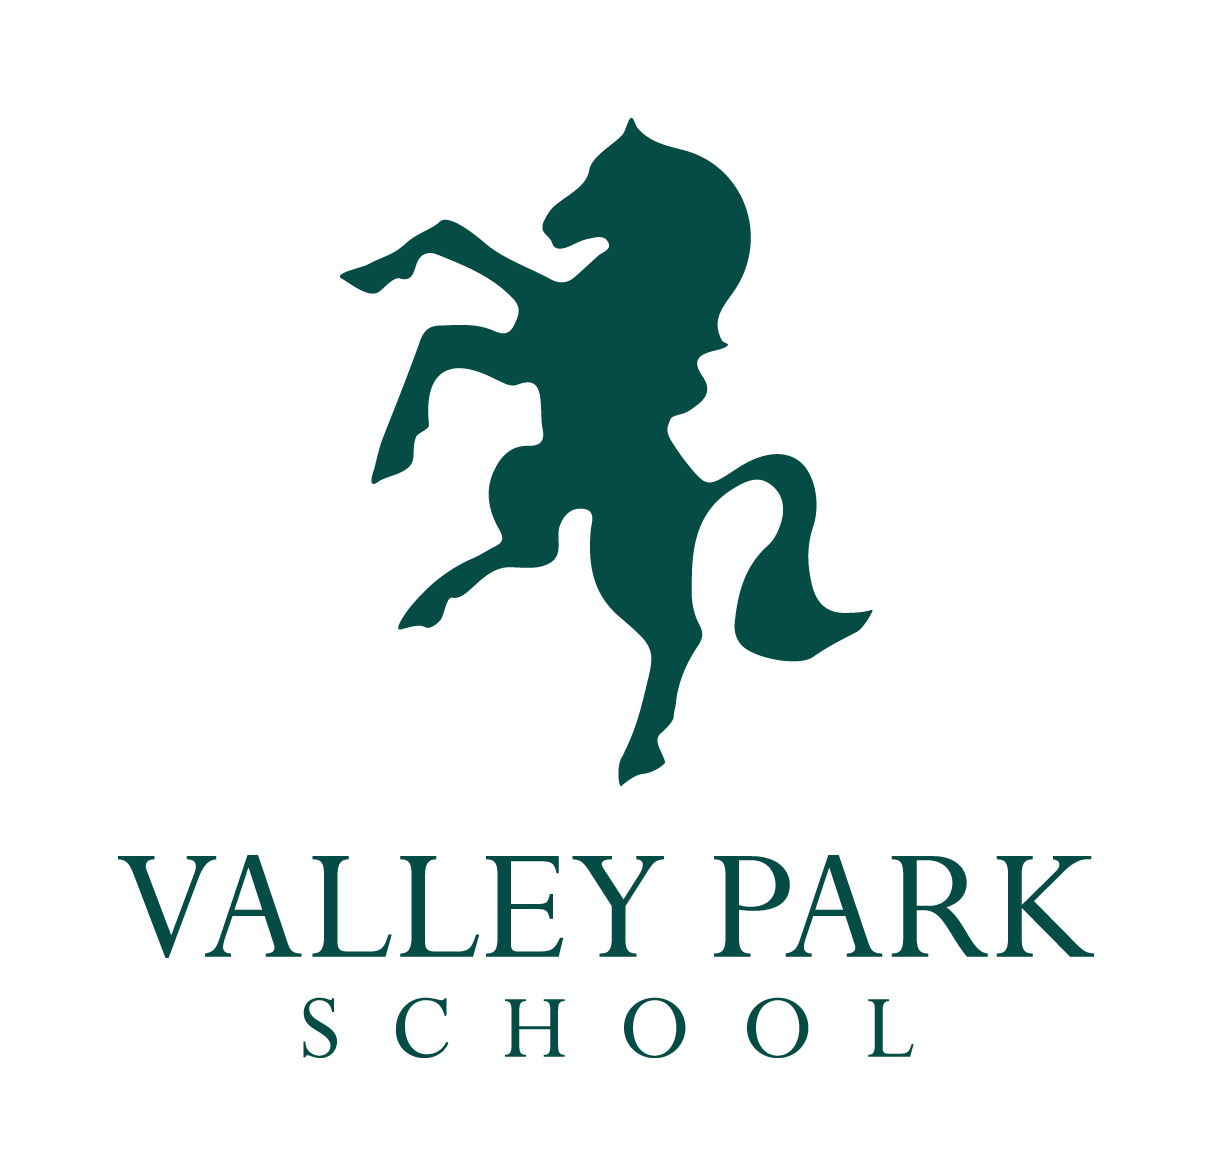 Valley Park School